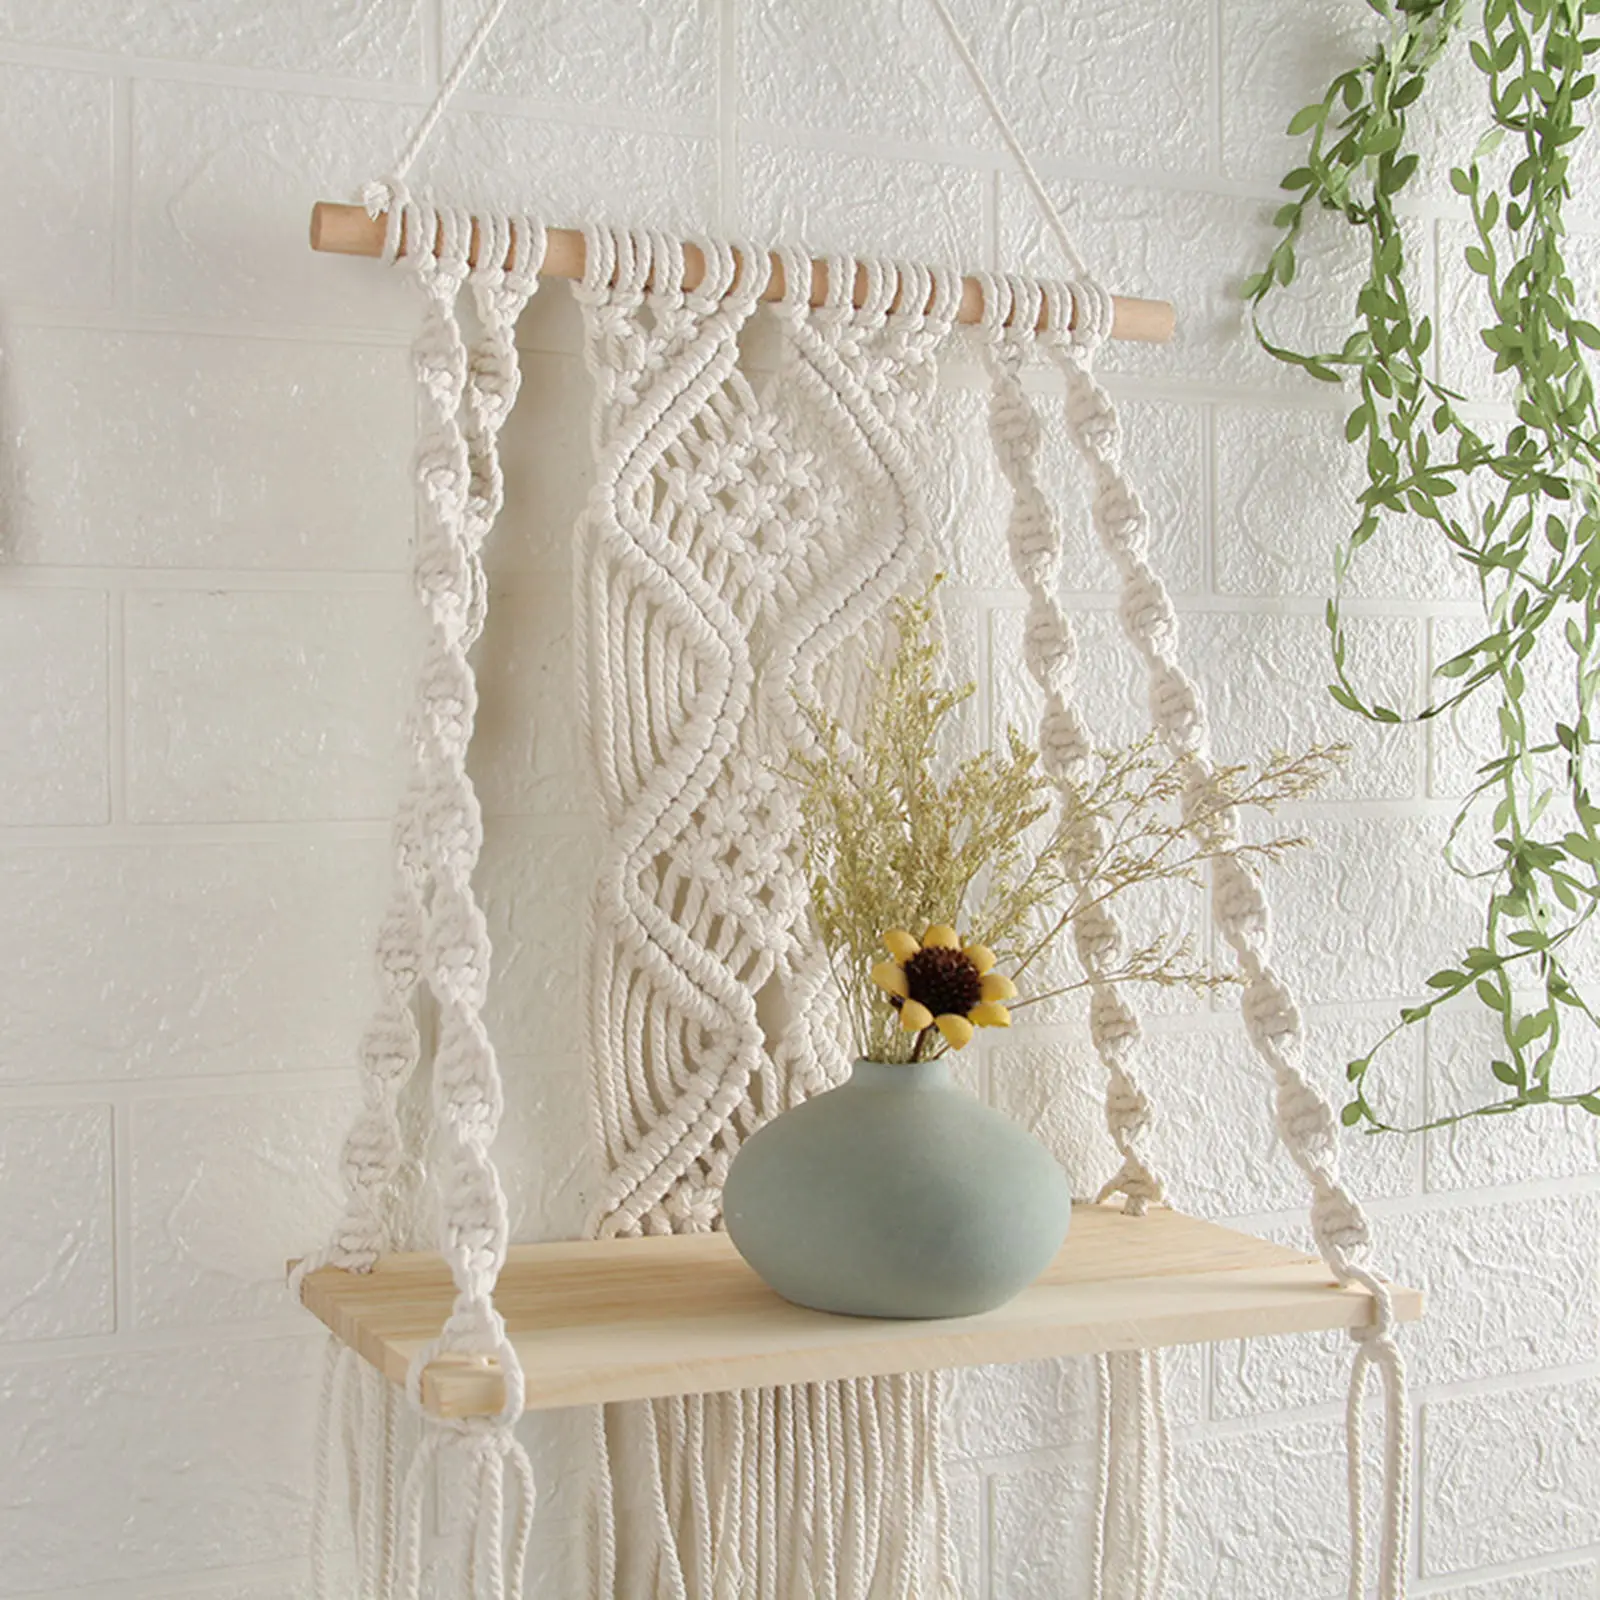 50x30cm Tapestry Wall Shelf Woven Macrame Flower Rack Wood Shelf Home Decor